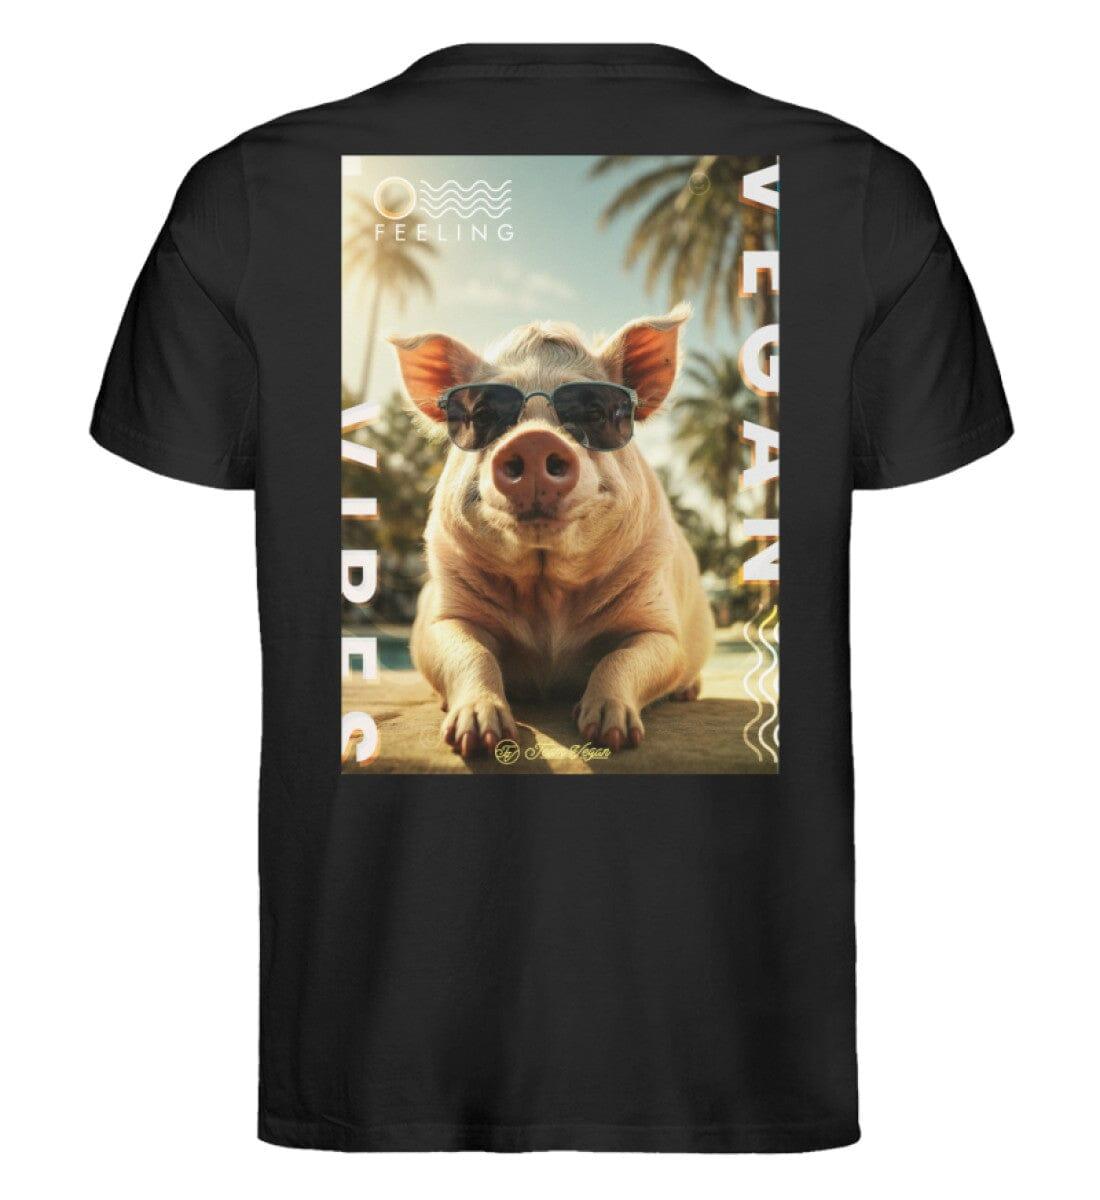 Vegan Vibes - Pig - Unisex Organic Shirt - Team Vegan © vegan t shirt